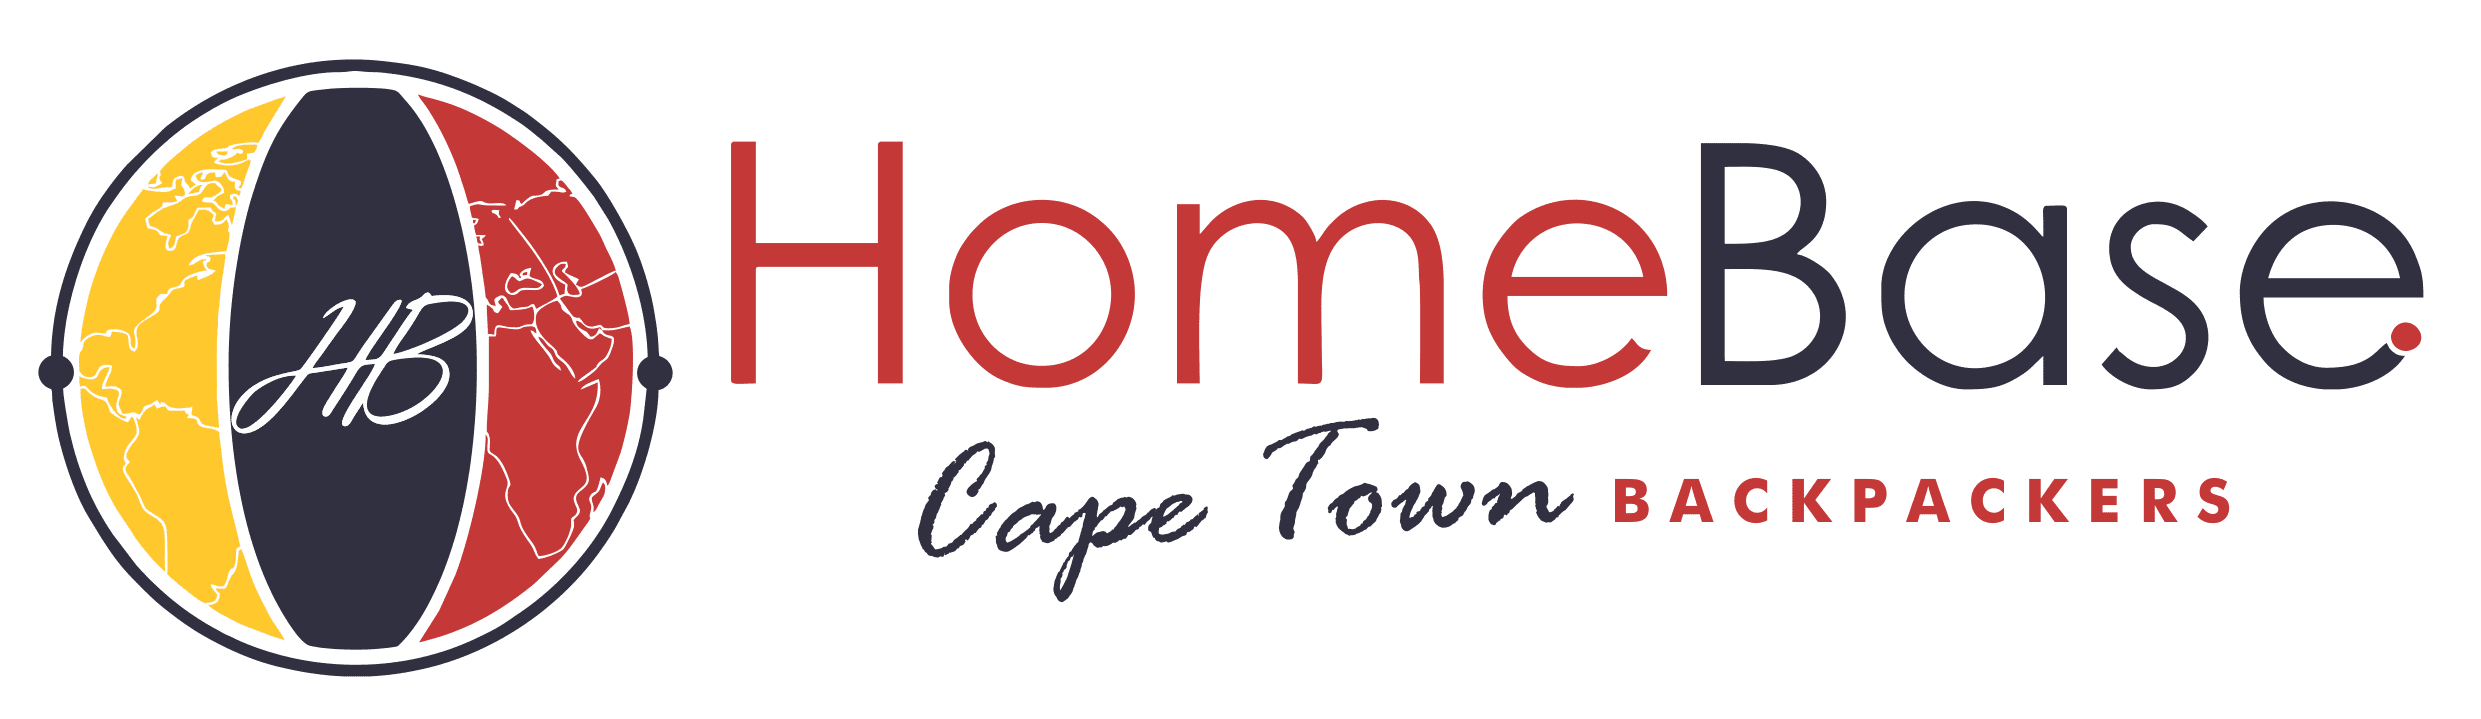 Homebase Logo - HomeBase Cape Town